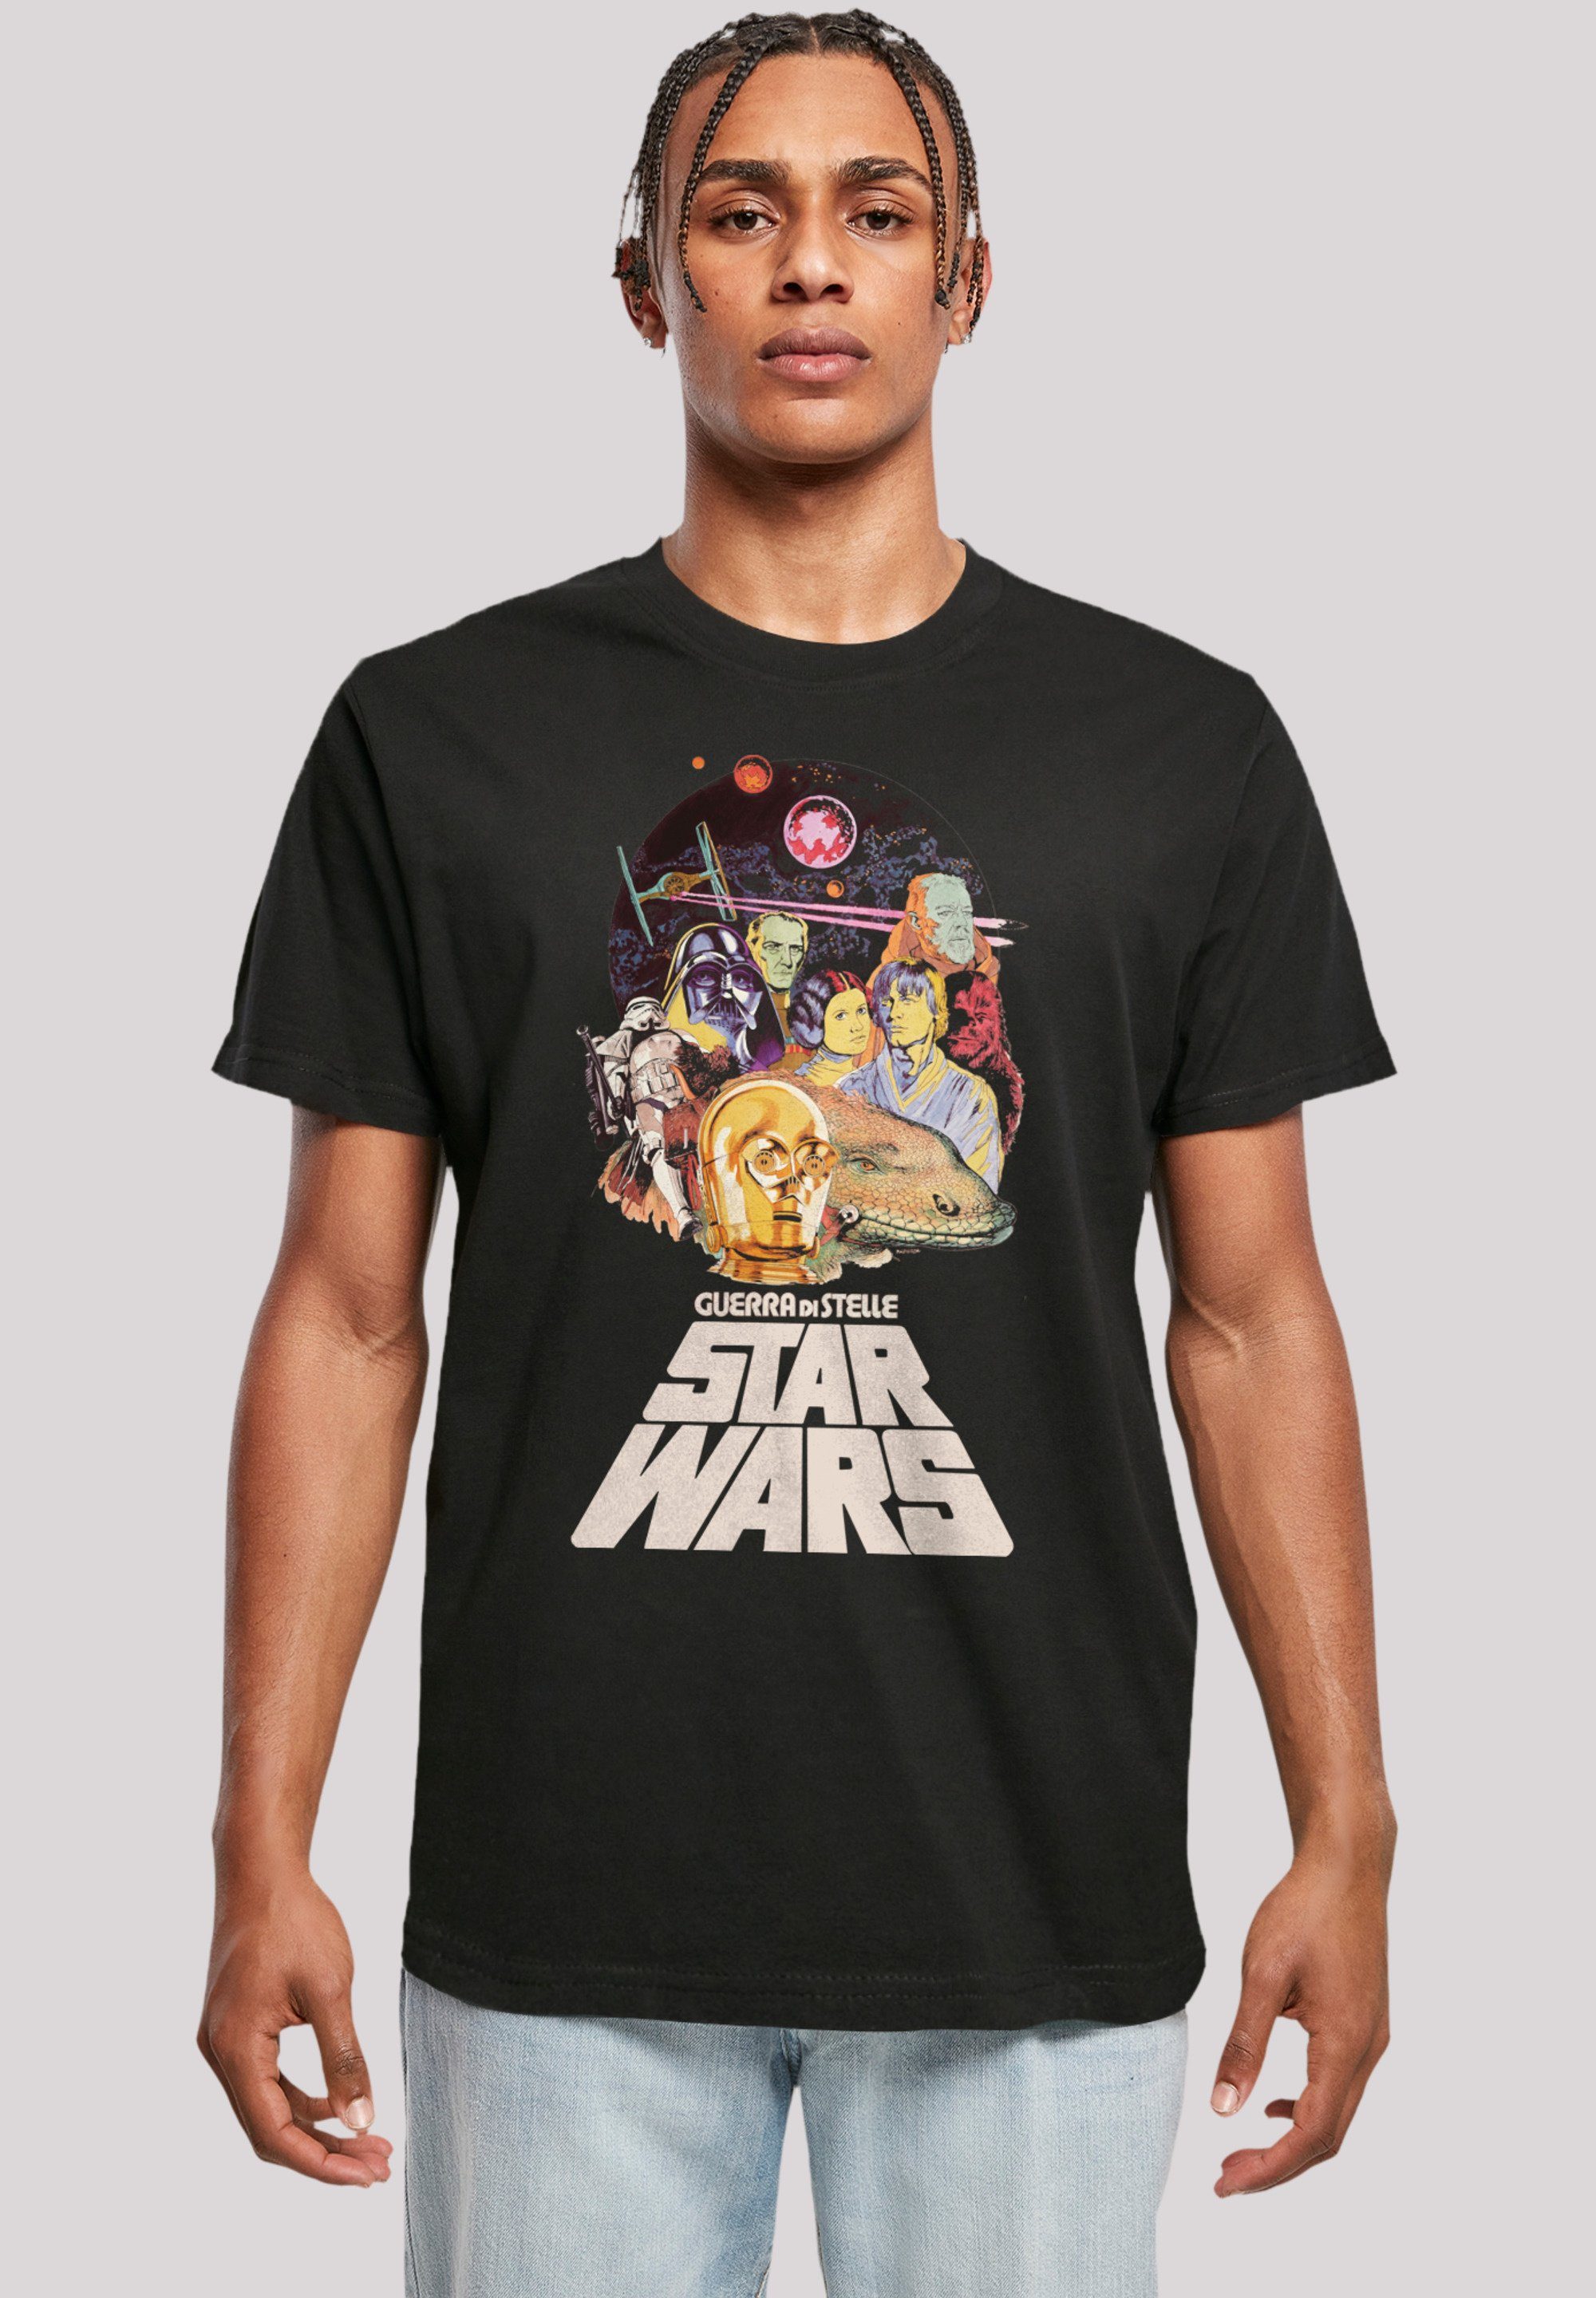 Star Wars Stelle Guerra Di Qualität T-Shirt F4NT4STIC Premium